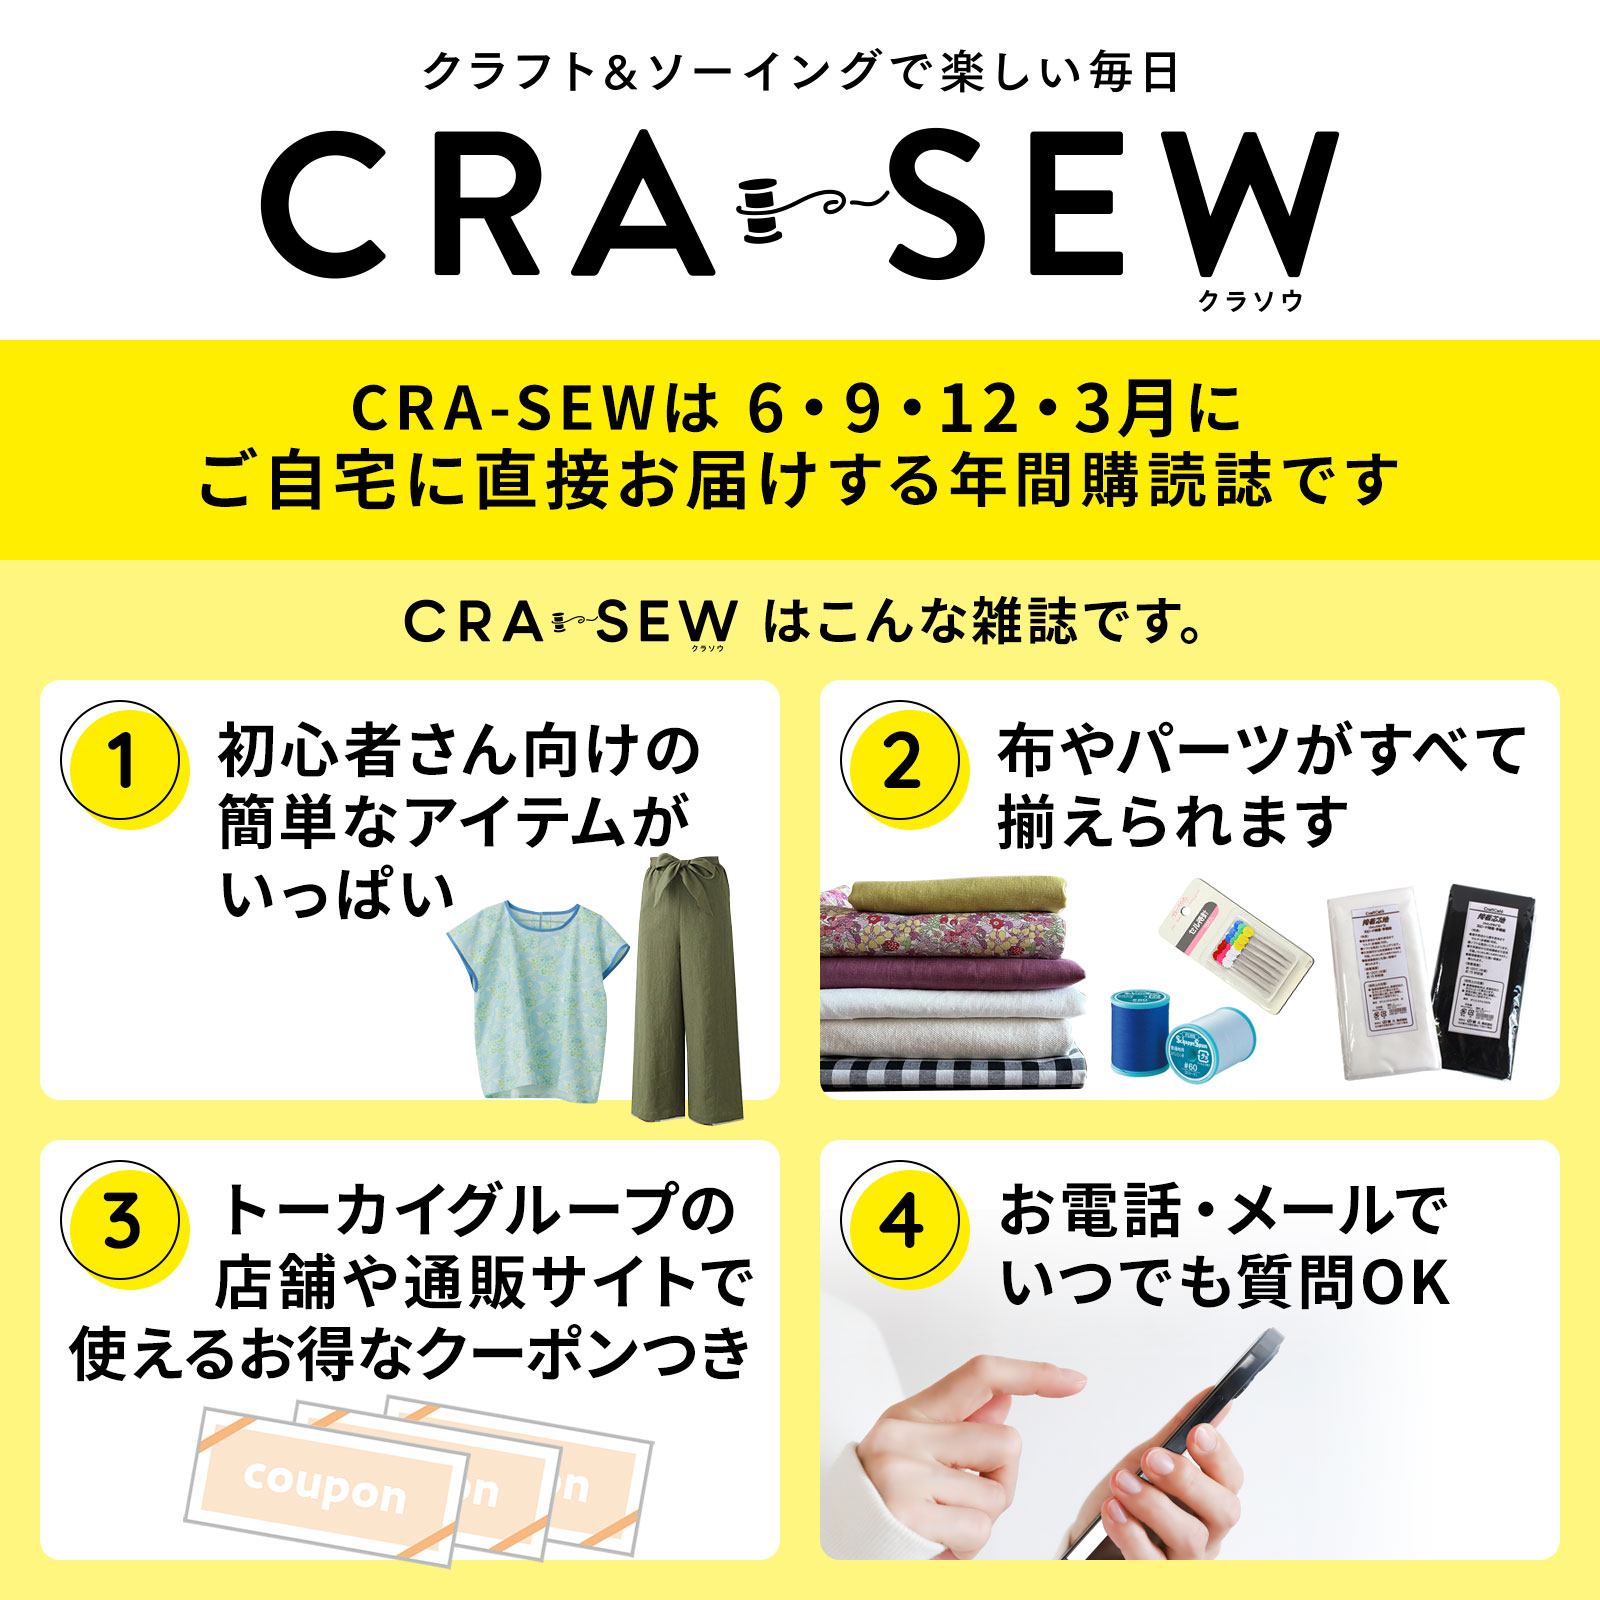 CRA-SEW（クラソウ） Vol.2-5（9/7発売号～）【年間購読】